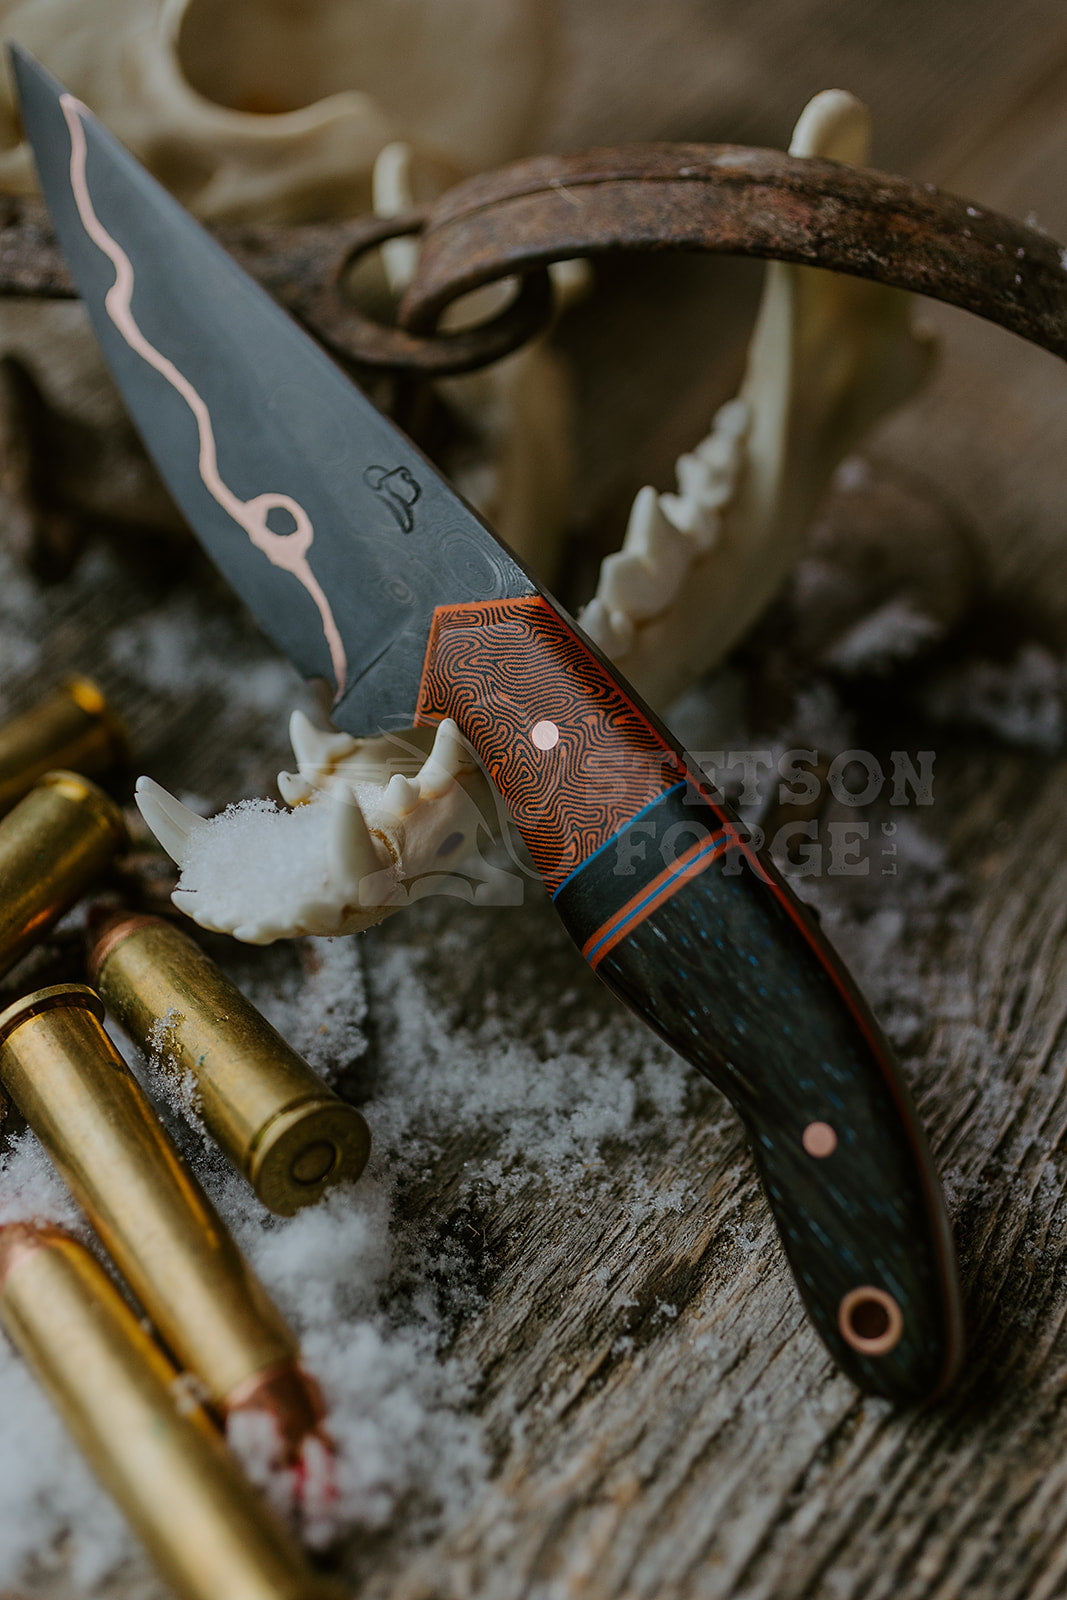 Stetson Forge  Hand Made Montana Knives